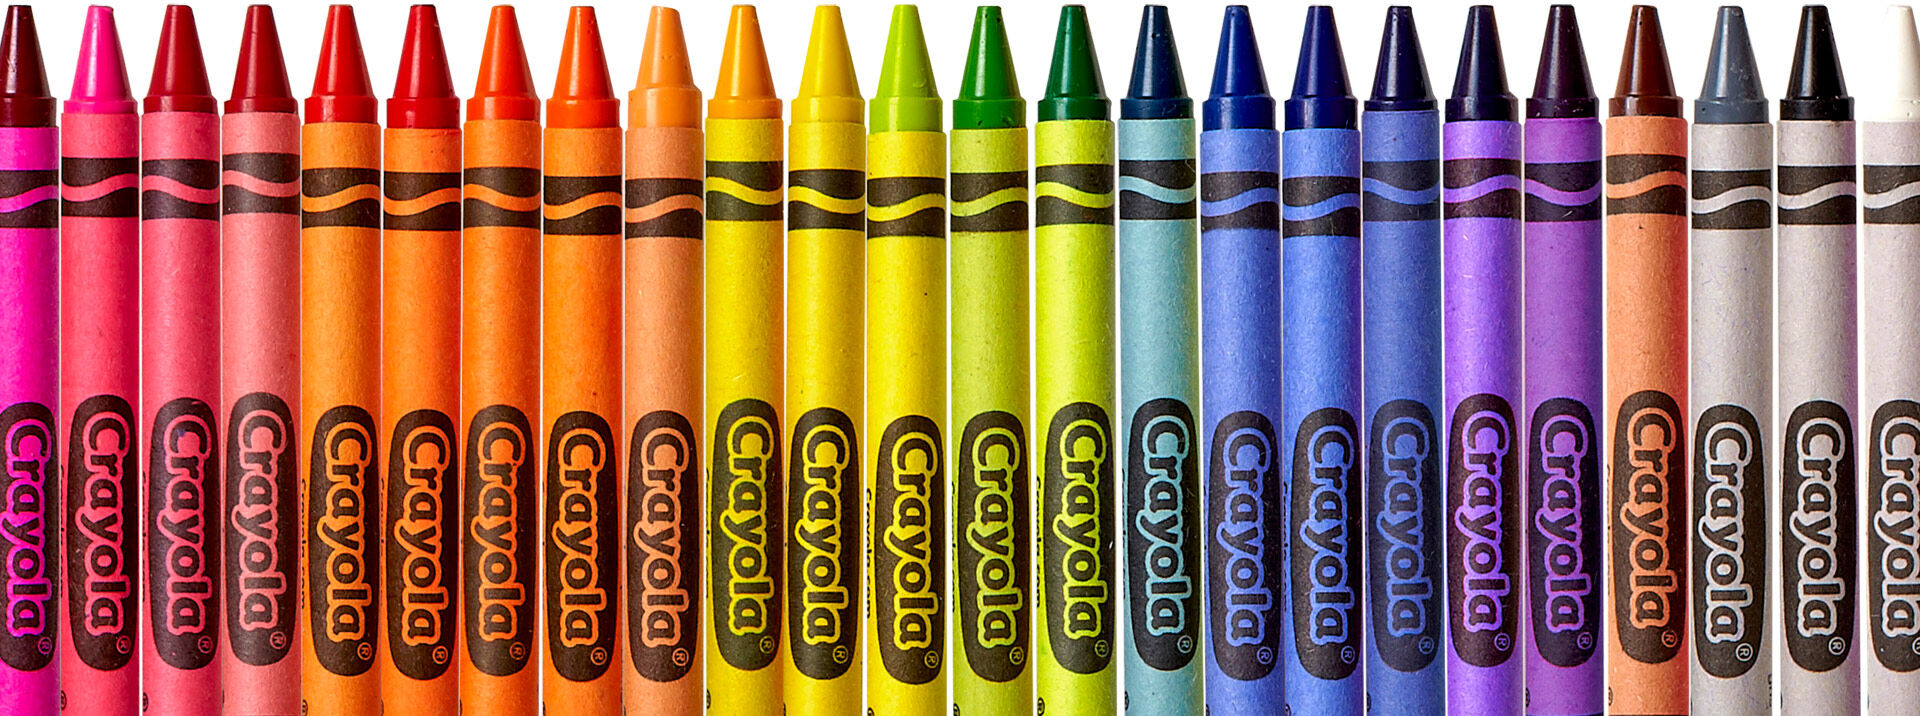 Crayola Crayons Shop Crayon Packs Boxes Crayola Coloring Wallpapers Download Free Images Wallpaper [coloring654.blogspot.com]